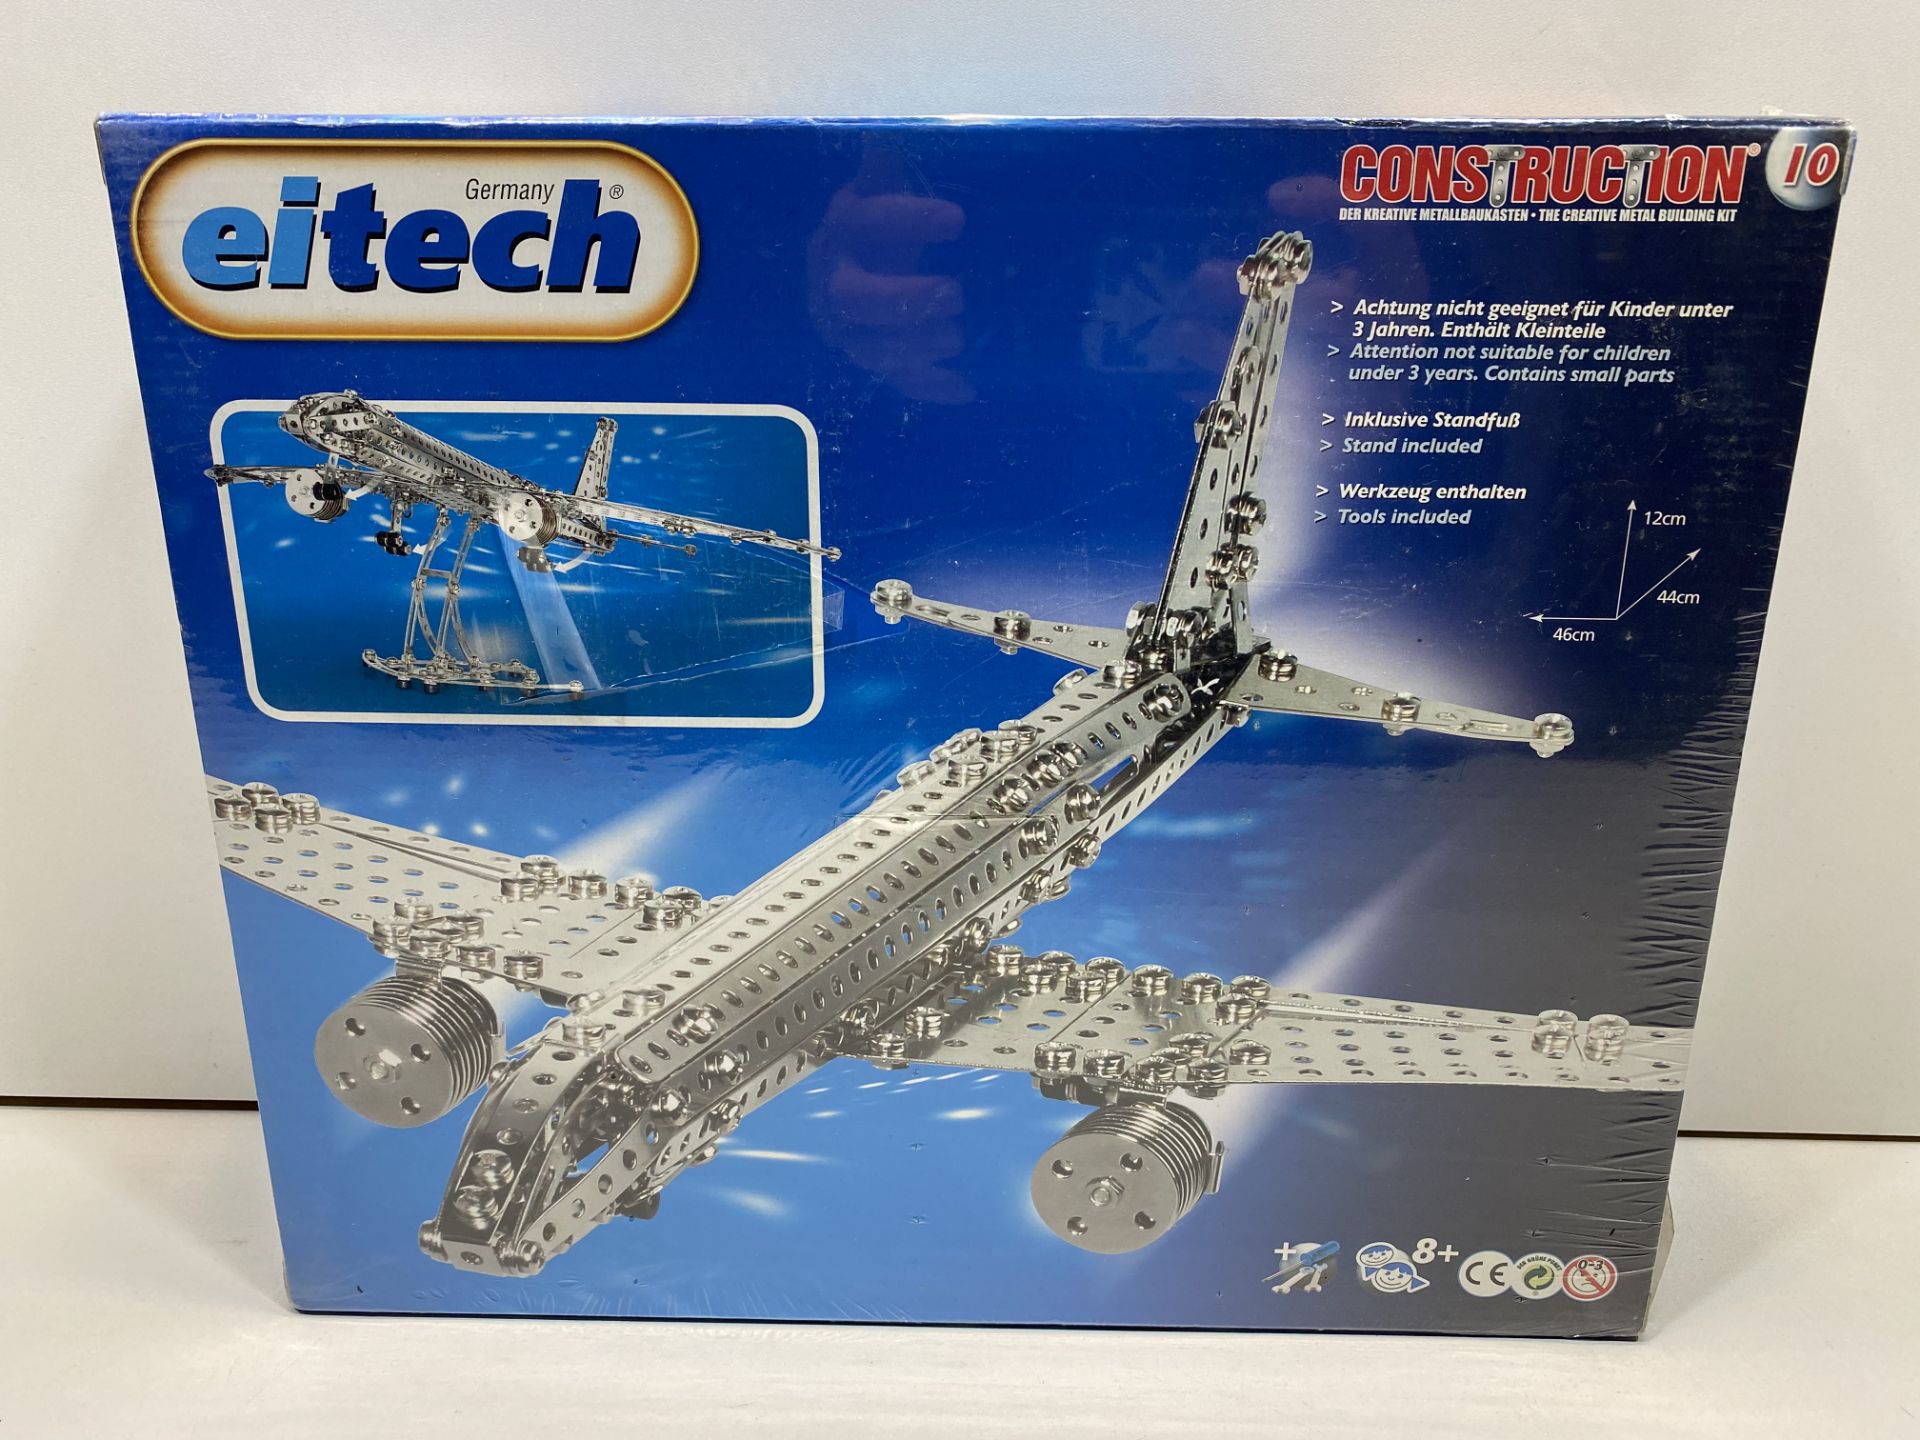 1 x Eitech Plane construction kit |4012854000101 - Image 3 of 3